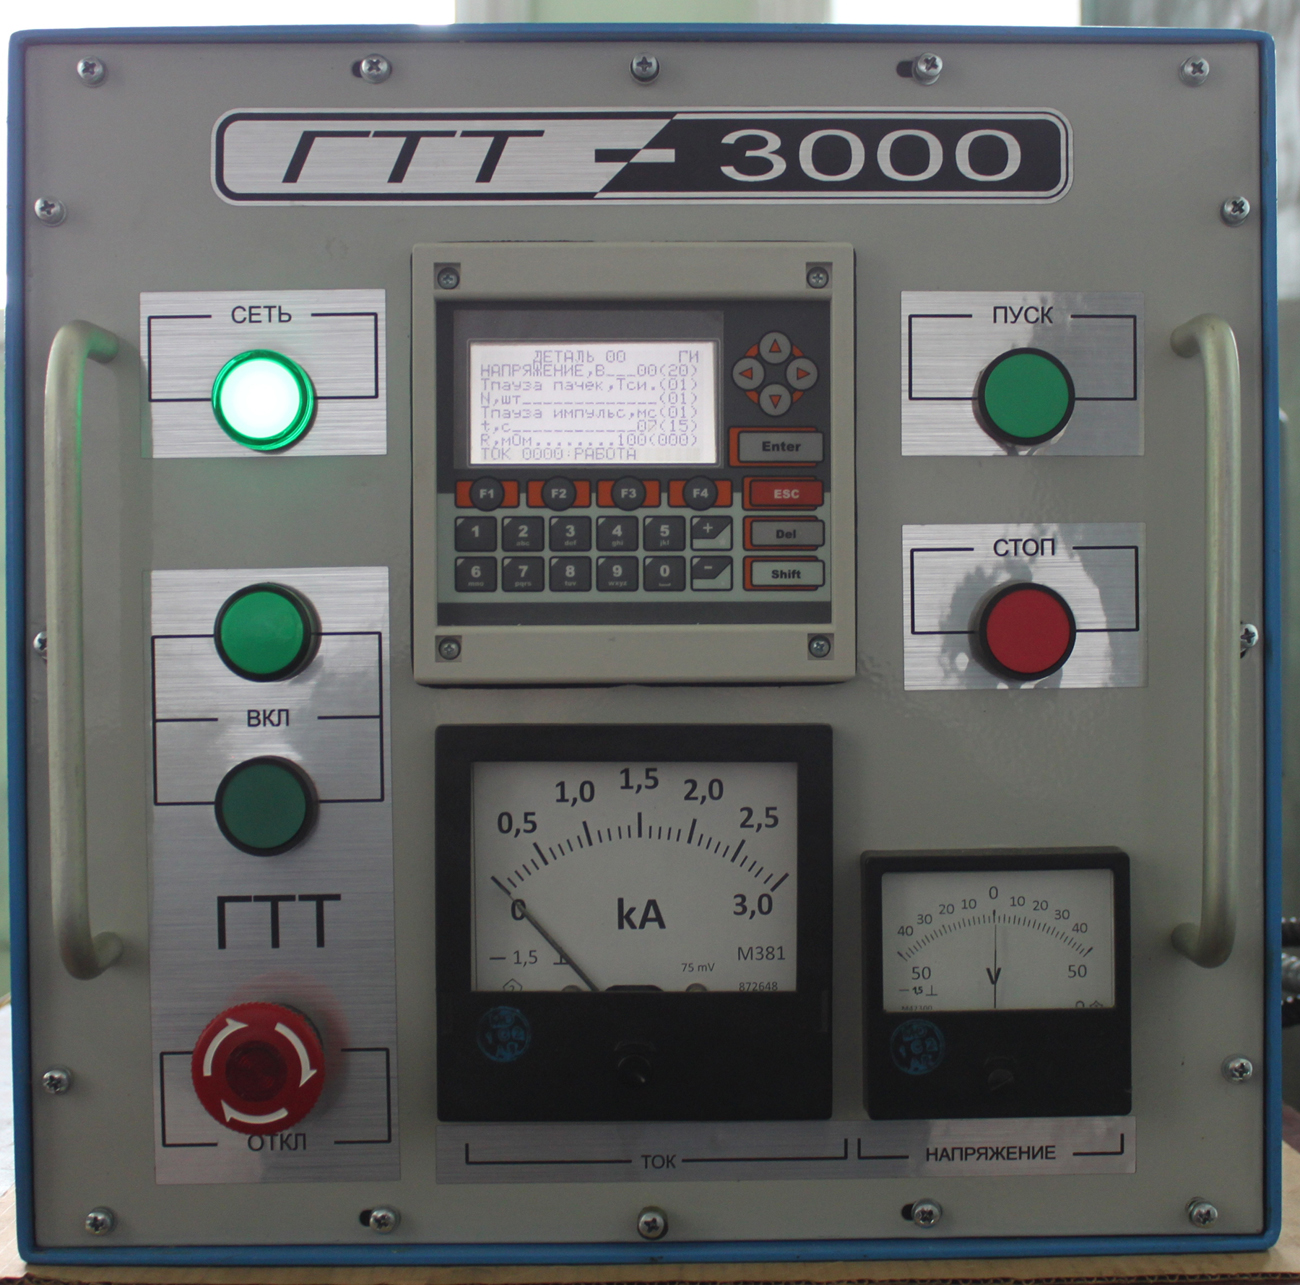 Gtt-3000 generator